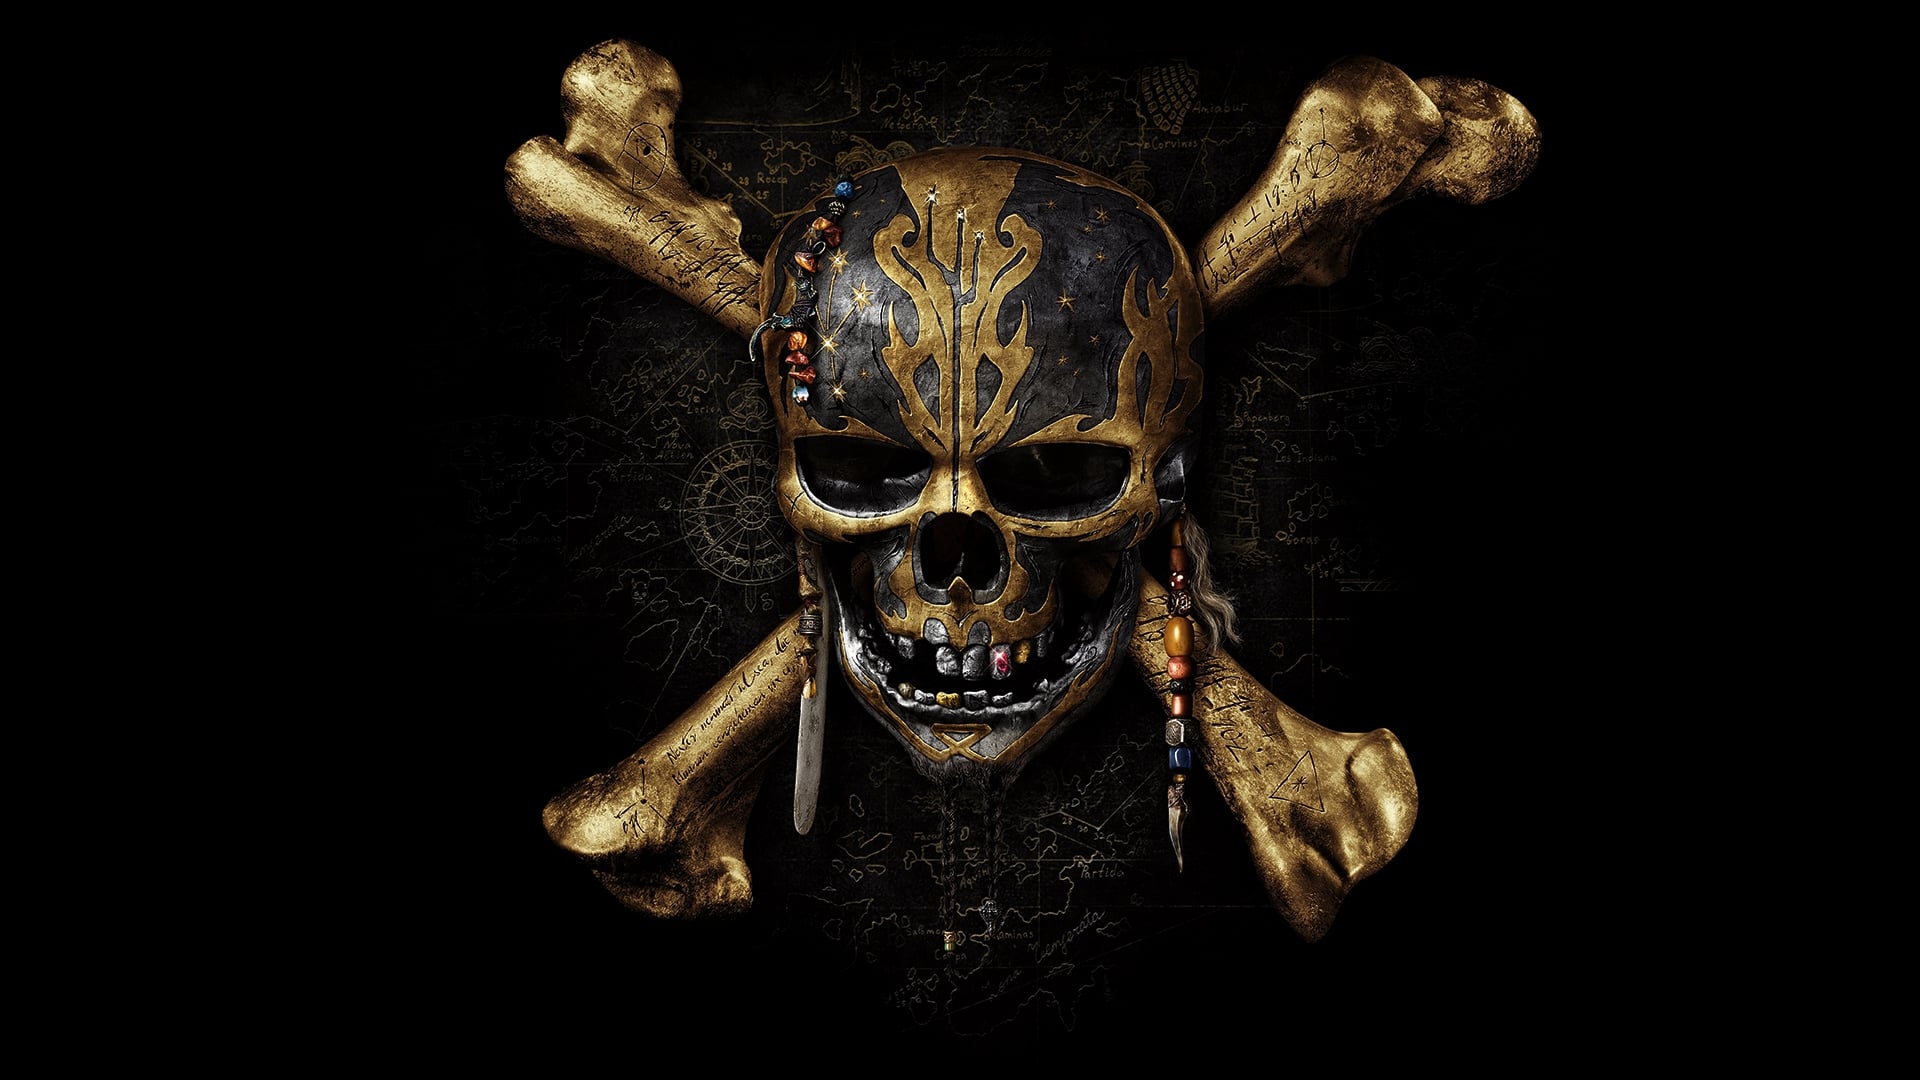 Image du film Pirates des Caraïbes : la vengeance de Salazar 9e693nqw4rc7i2qadlelka6rz6ajpg